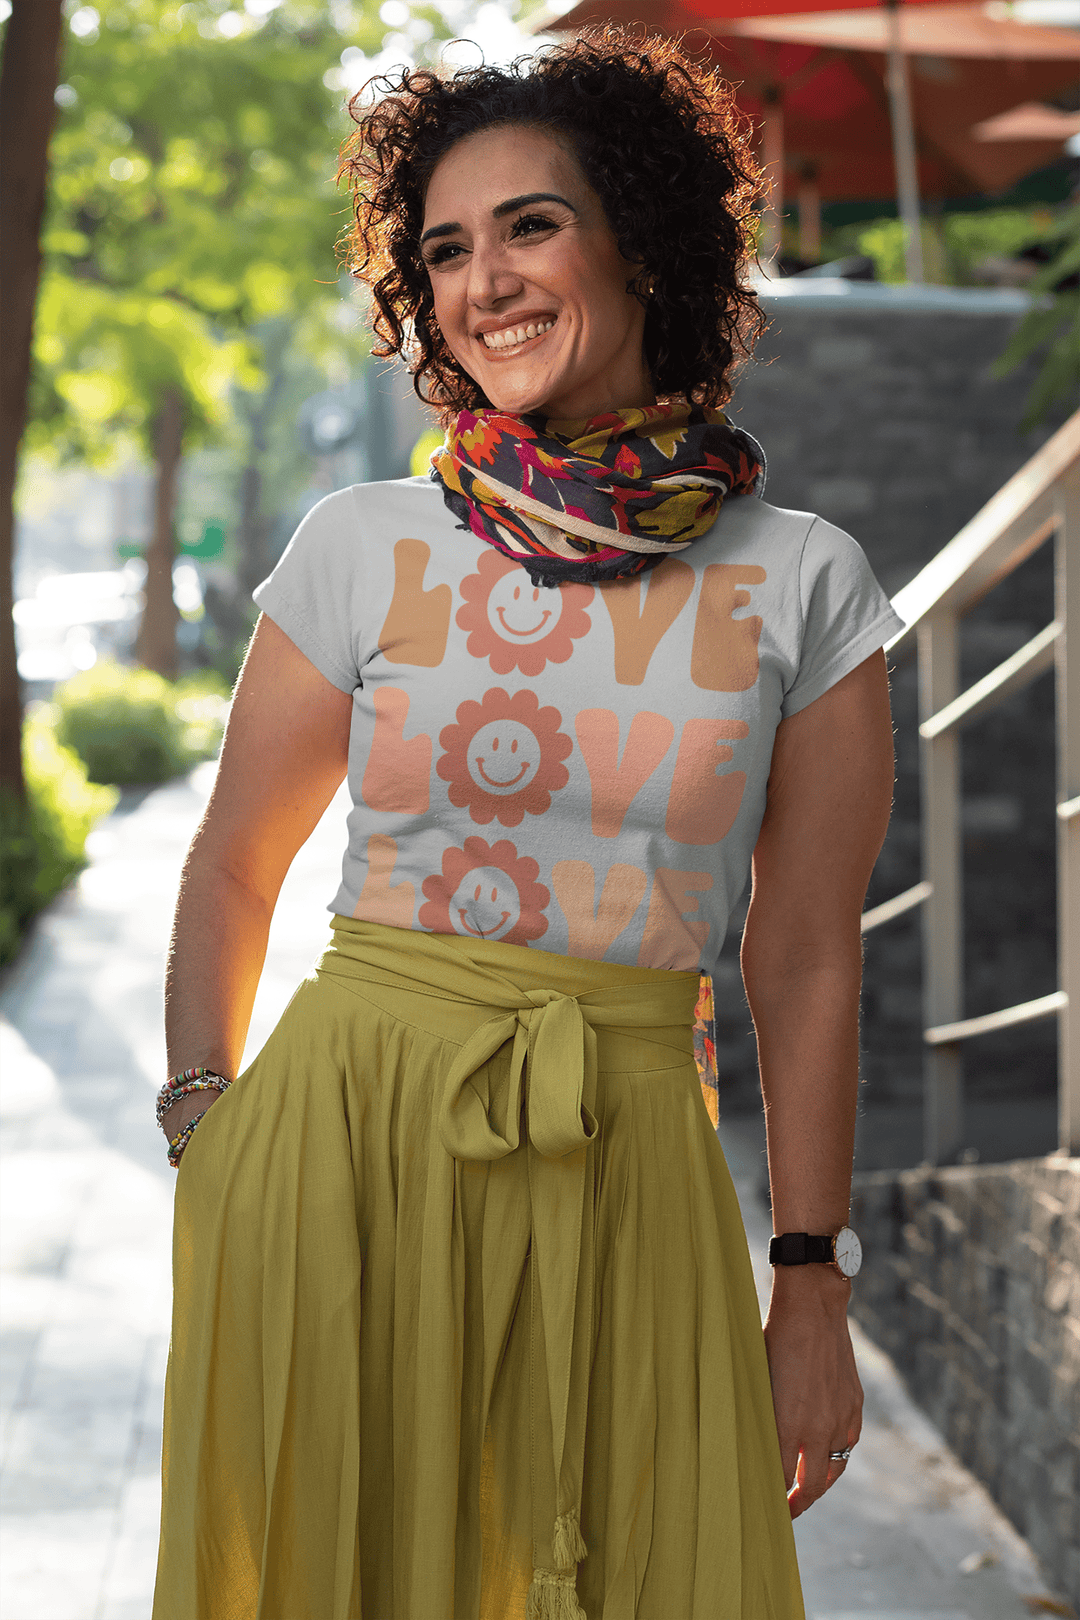 Retro Love T-Shirt Smiley Face Daisy Design